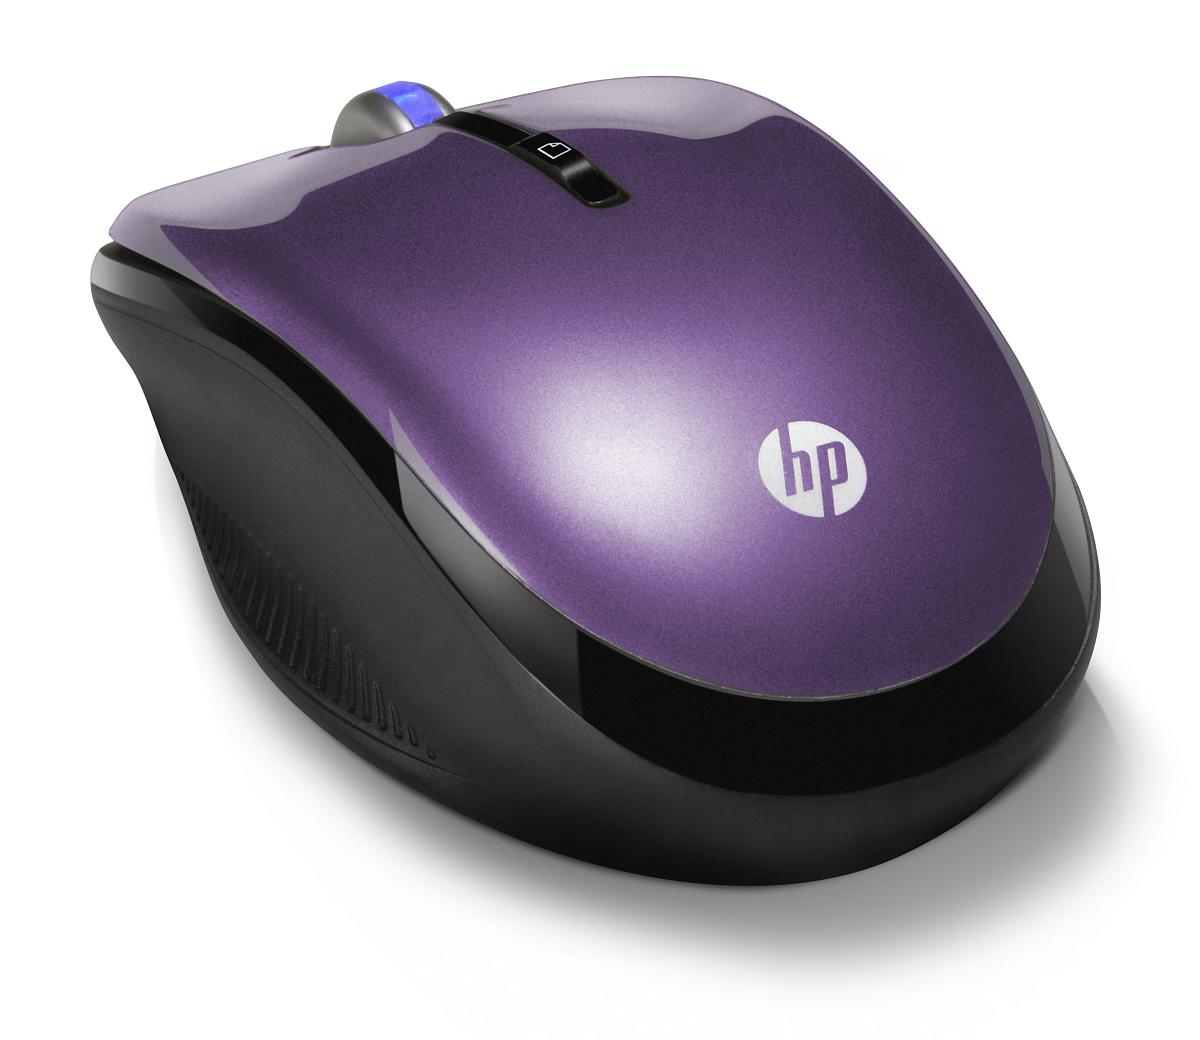 Bezdrátová myš HP - Sweet Purple (LY785AA)